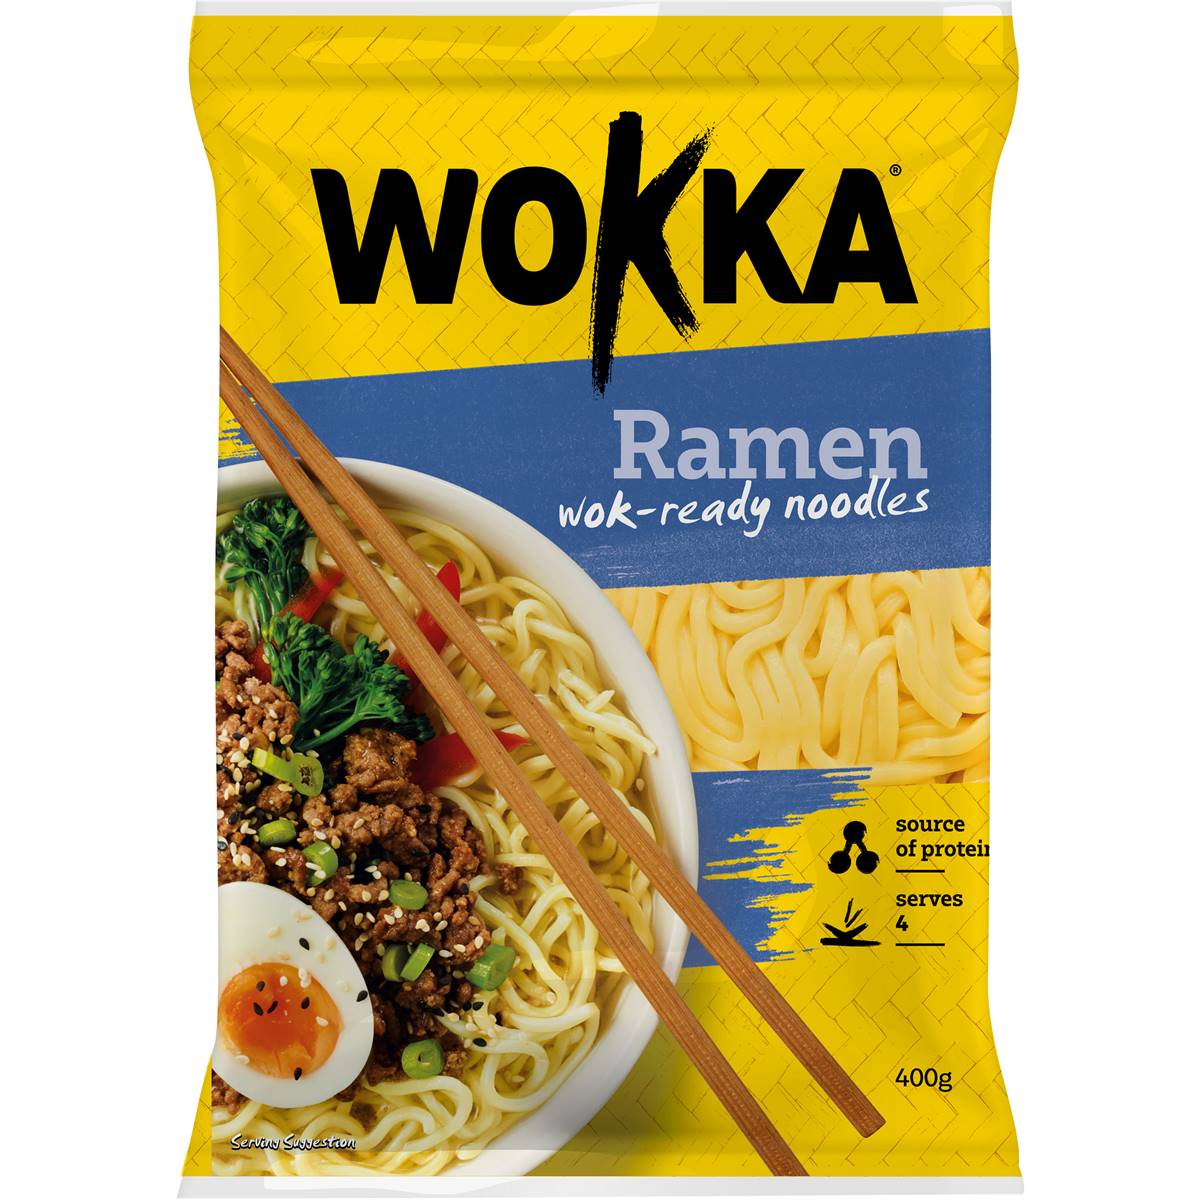 Calories in Wokka Ramen Noodles